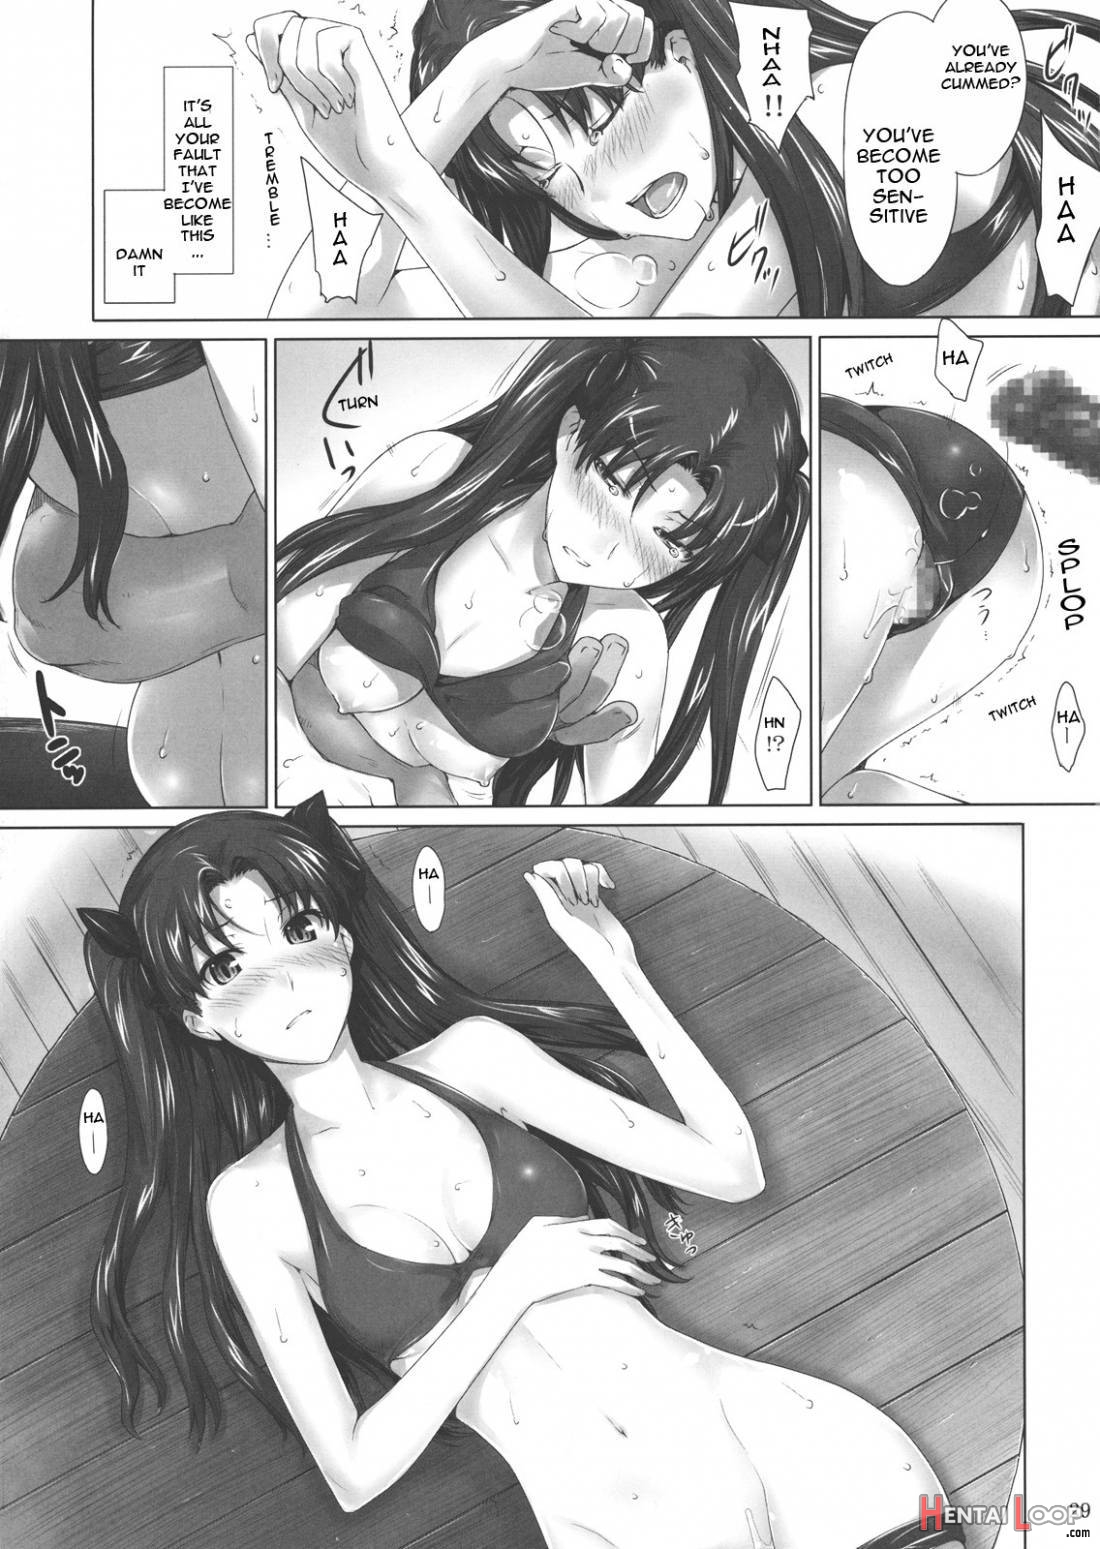 Tohsaka-ke no Kakei Jijou 7 page 28